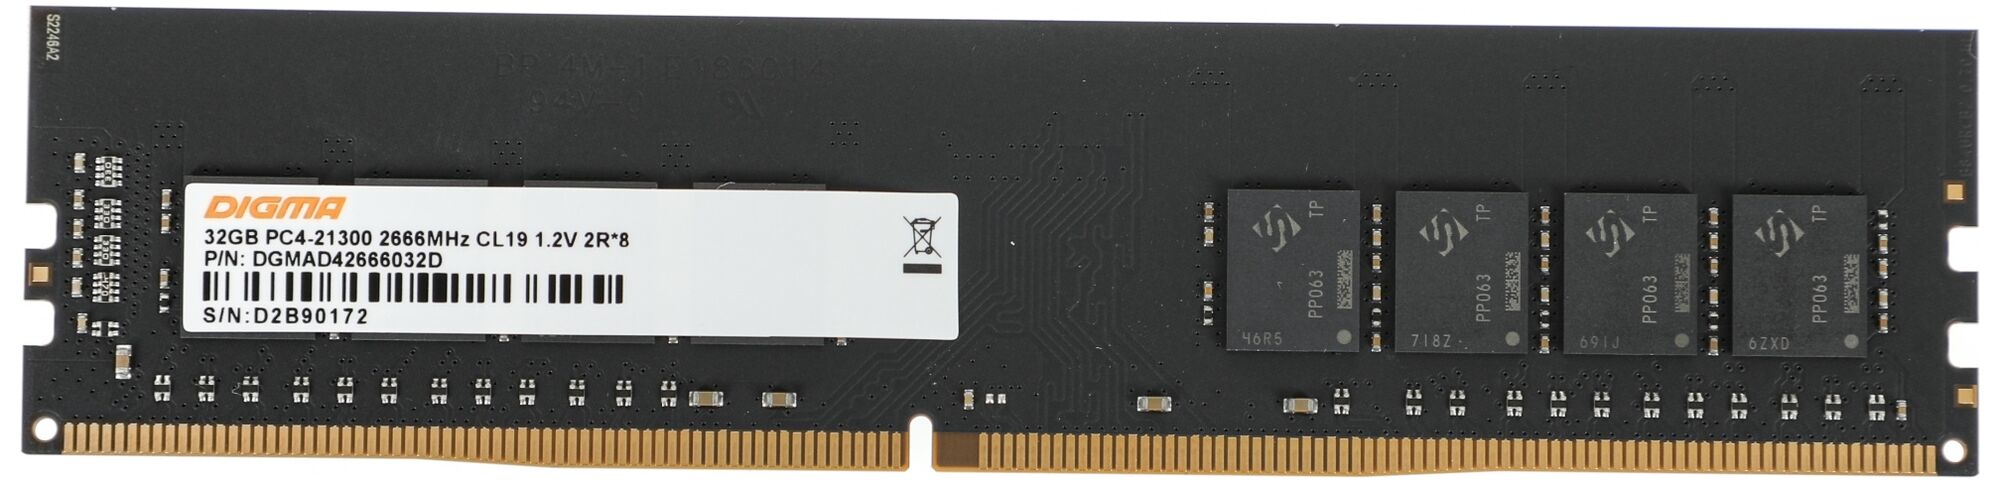 Оперативная память Digma Digma DGMAD42666032D/32GB / PC4-21300 DDR4 UDIMM-2666MHz DIMM/в комплекте 1 модуль